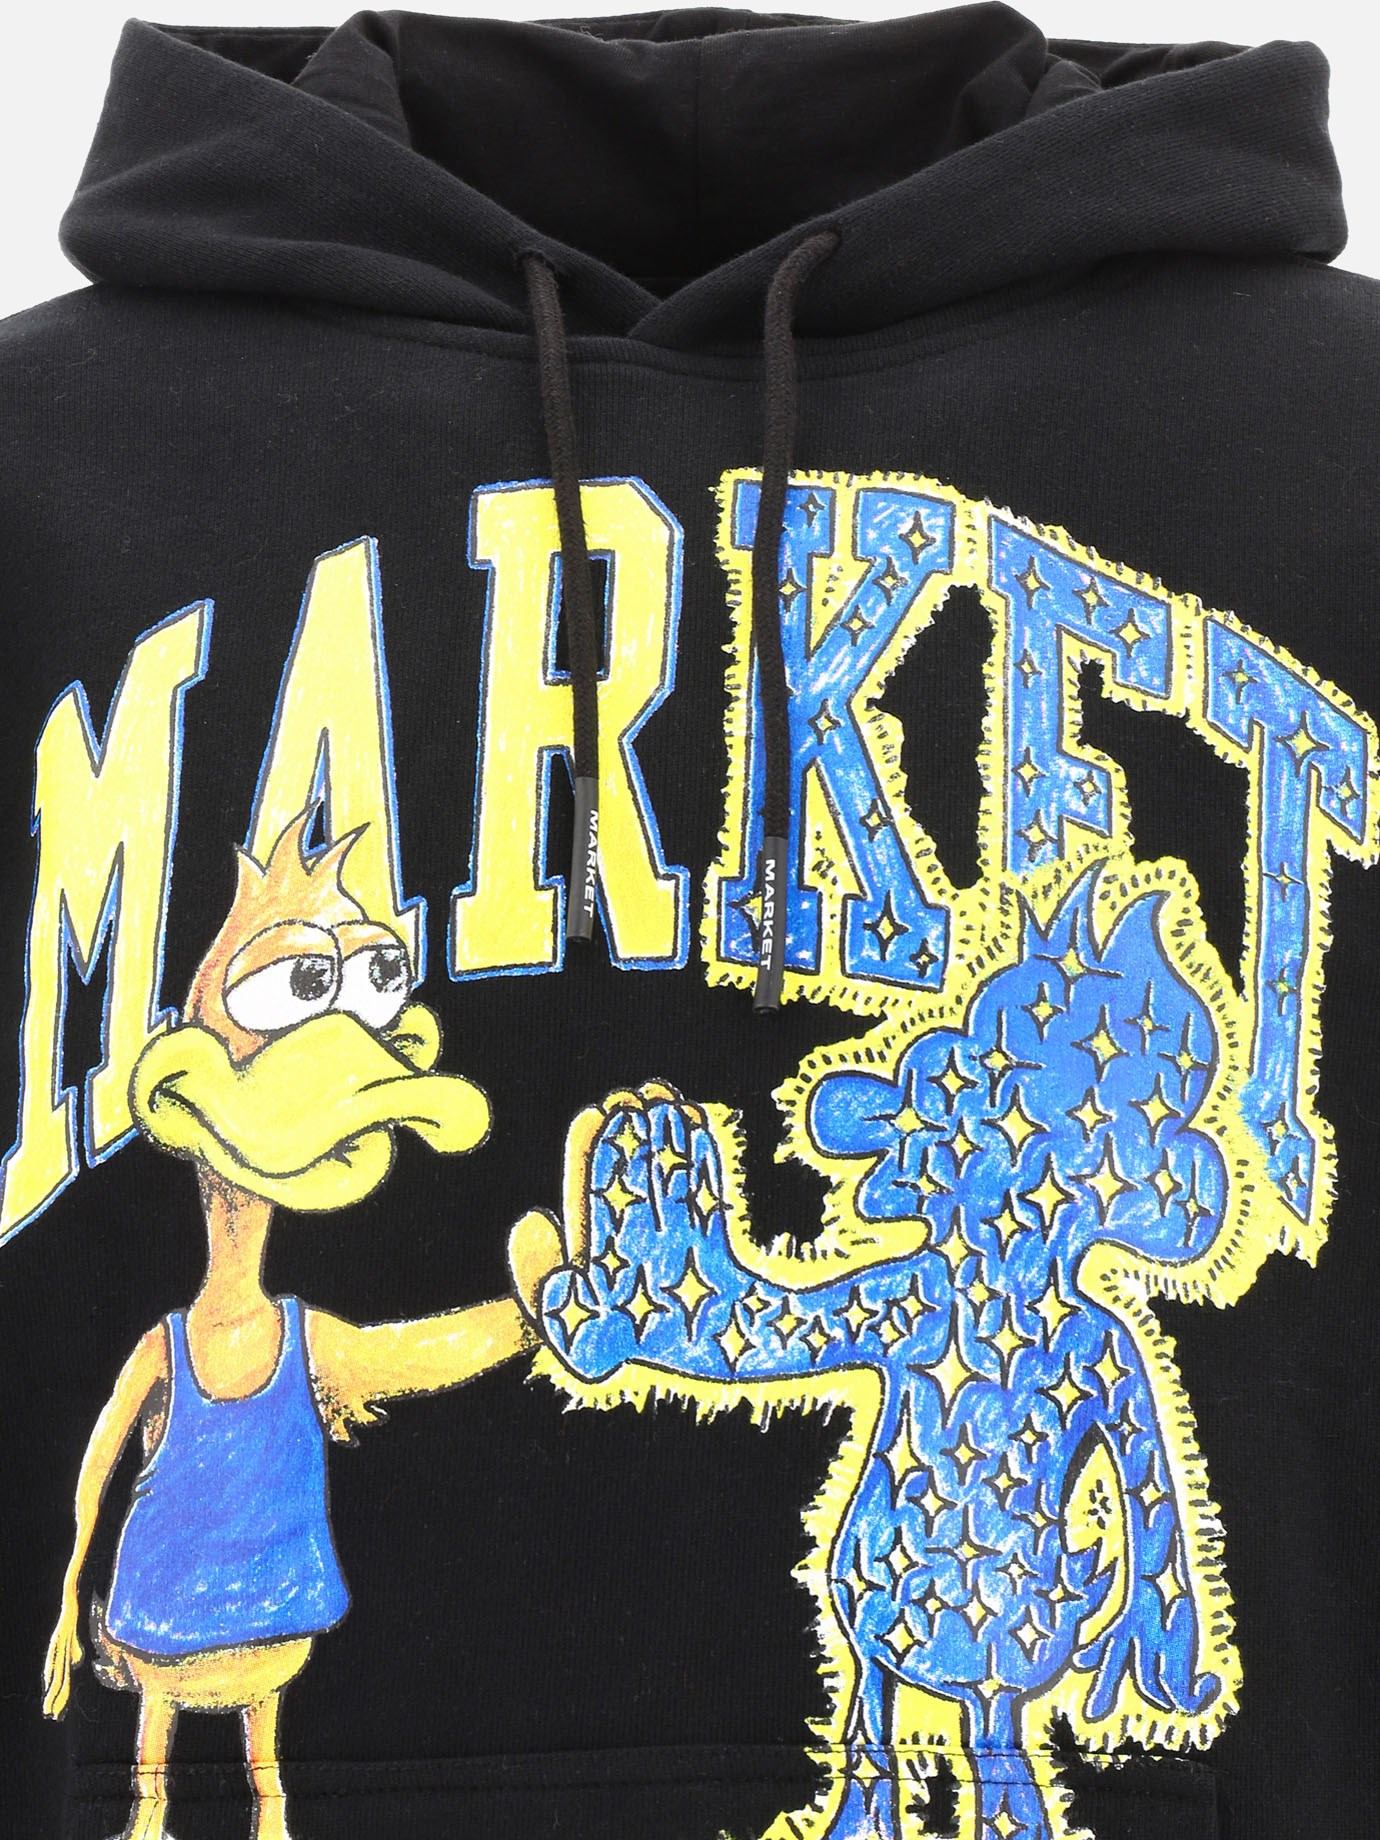  Dark and Light  hoodie by Market